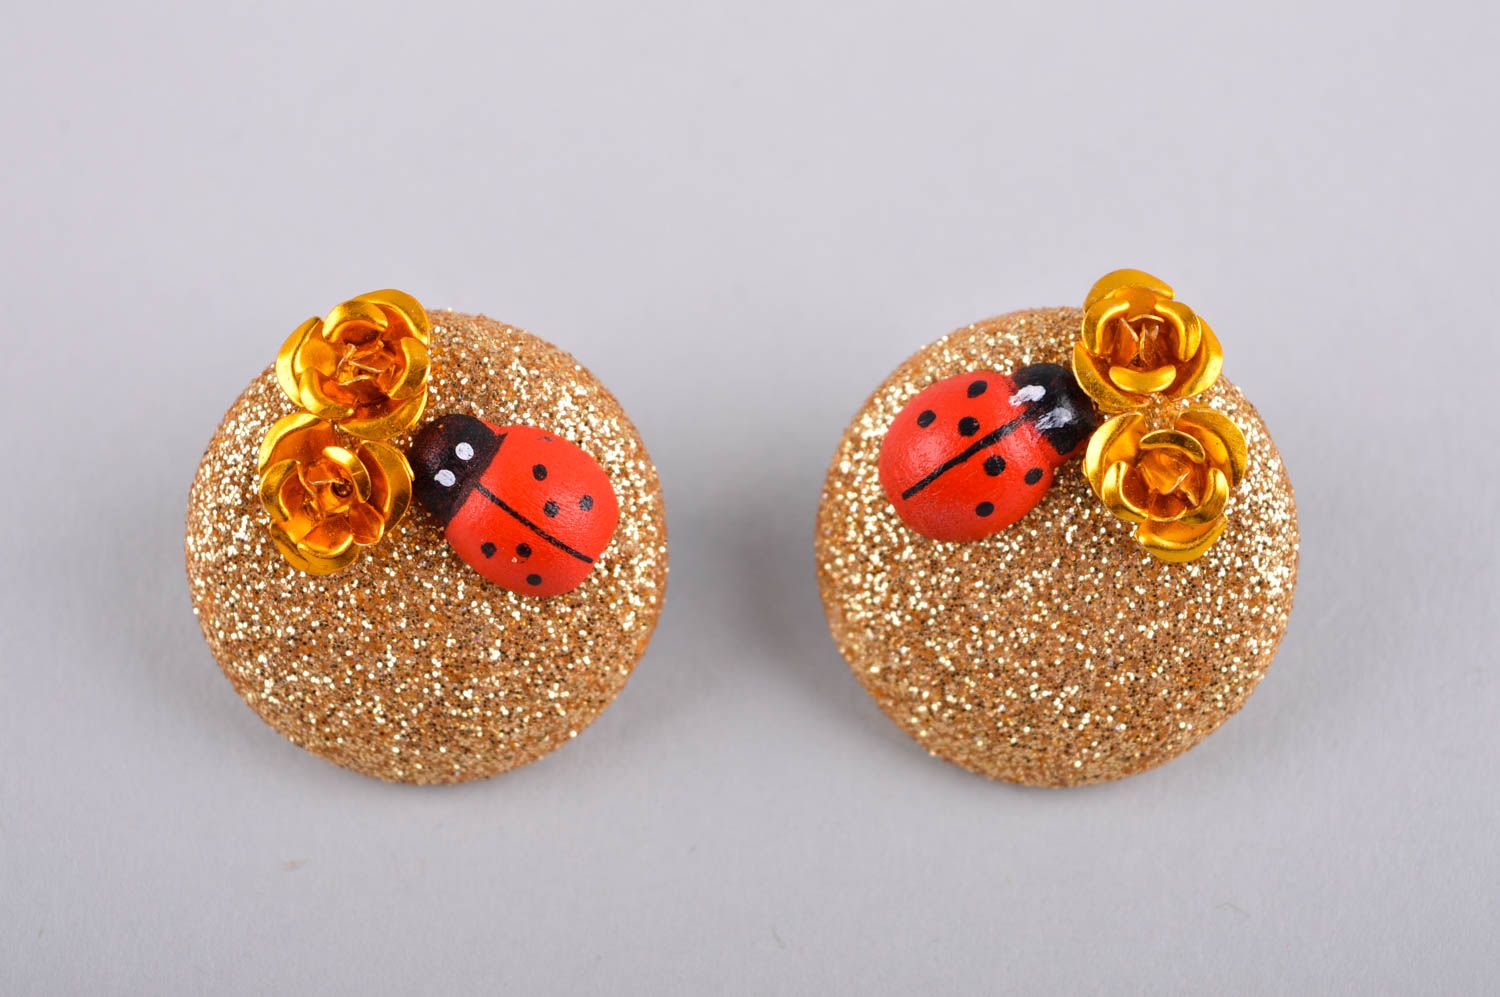 Handmade earrings designer earrings unusual stud earrings gift ideas for women photo 3